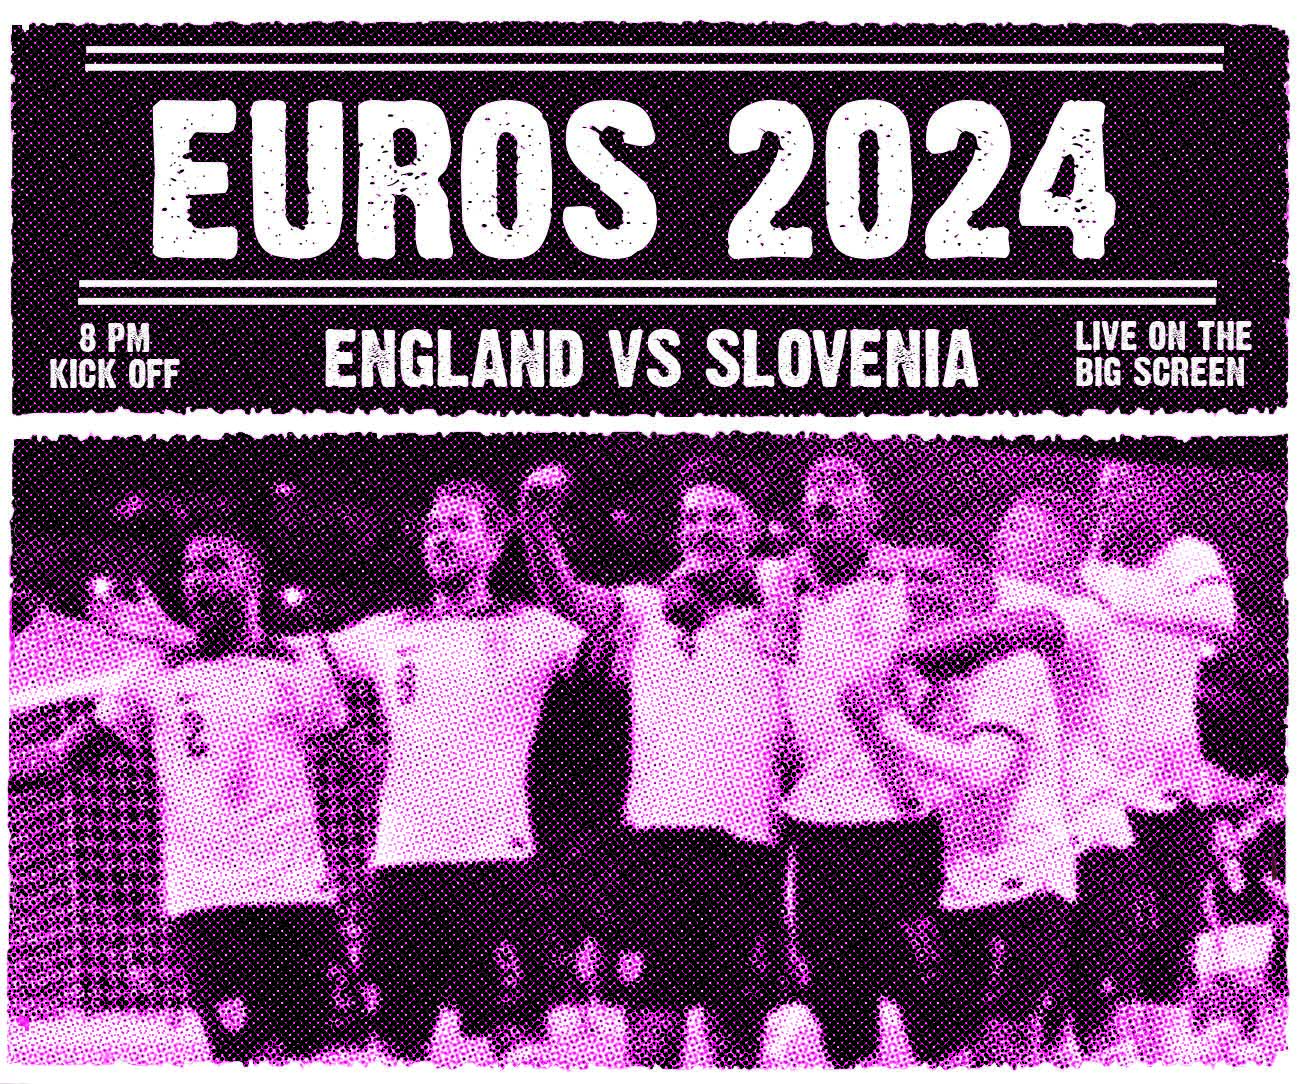 EUROS 24: ENGLAND VS SLOVENIA